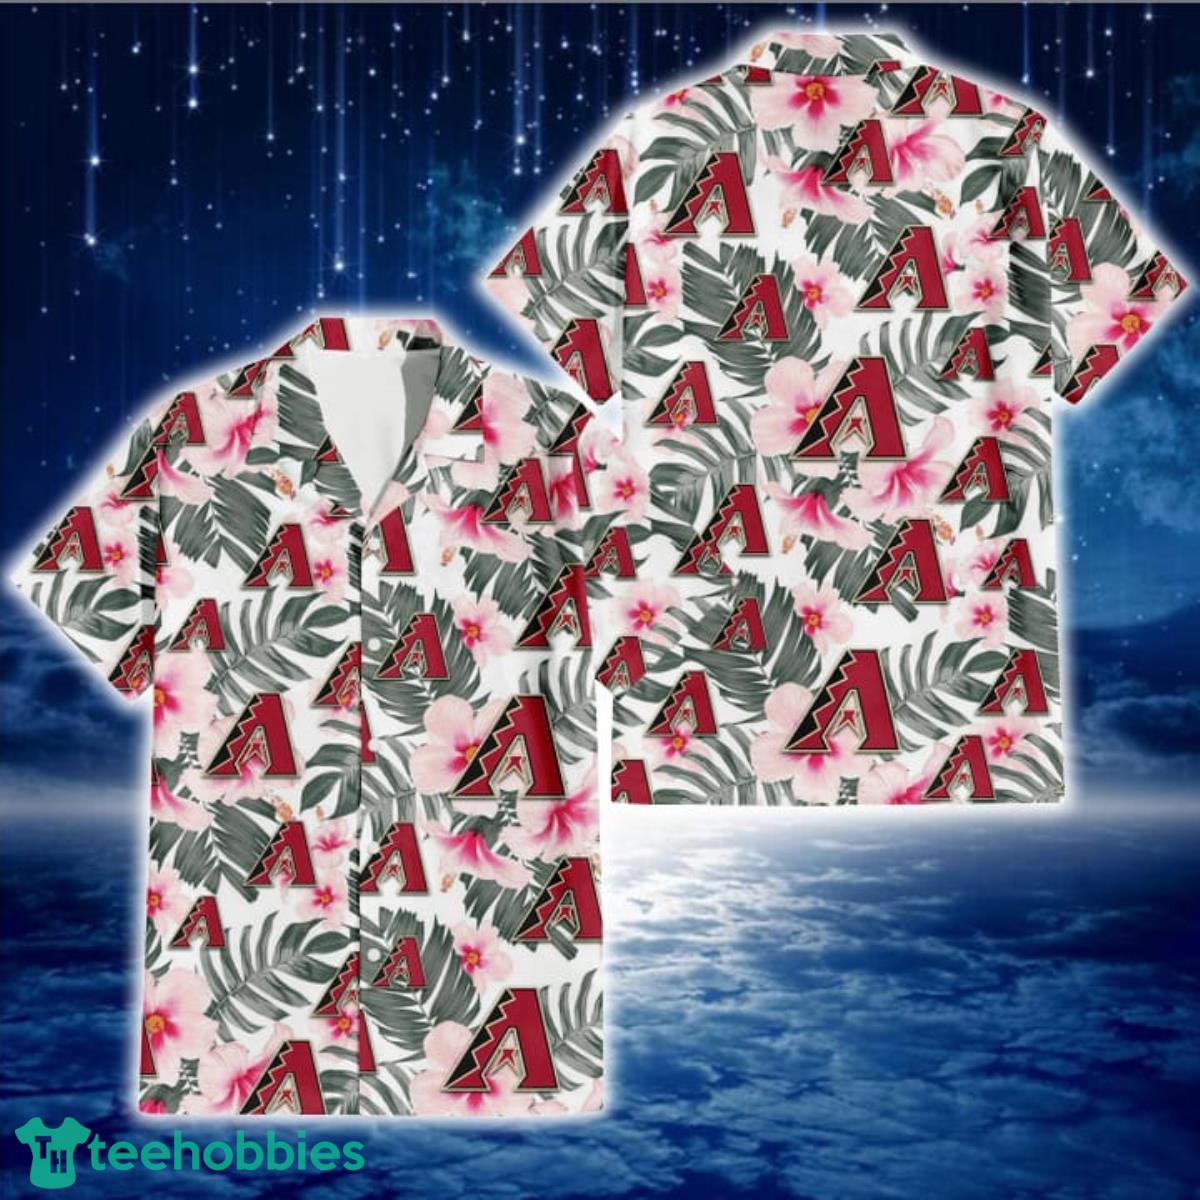 Arizona Diamondbacks Green Leaf Pattern Tropical Hawaiian Shirt For Men And  Women - Freedomdesign